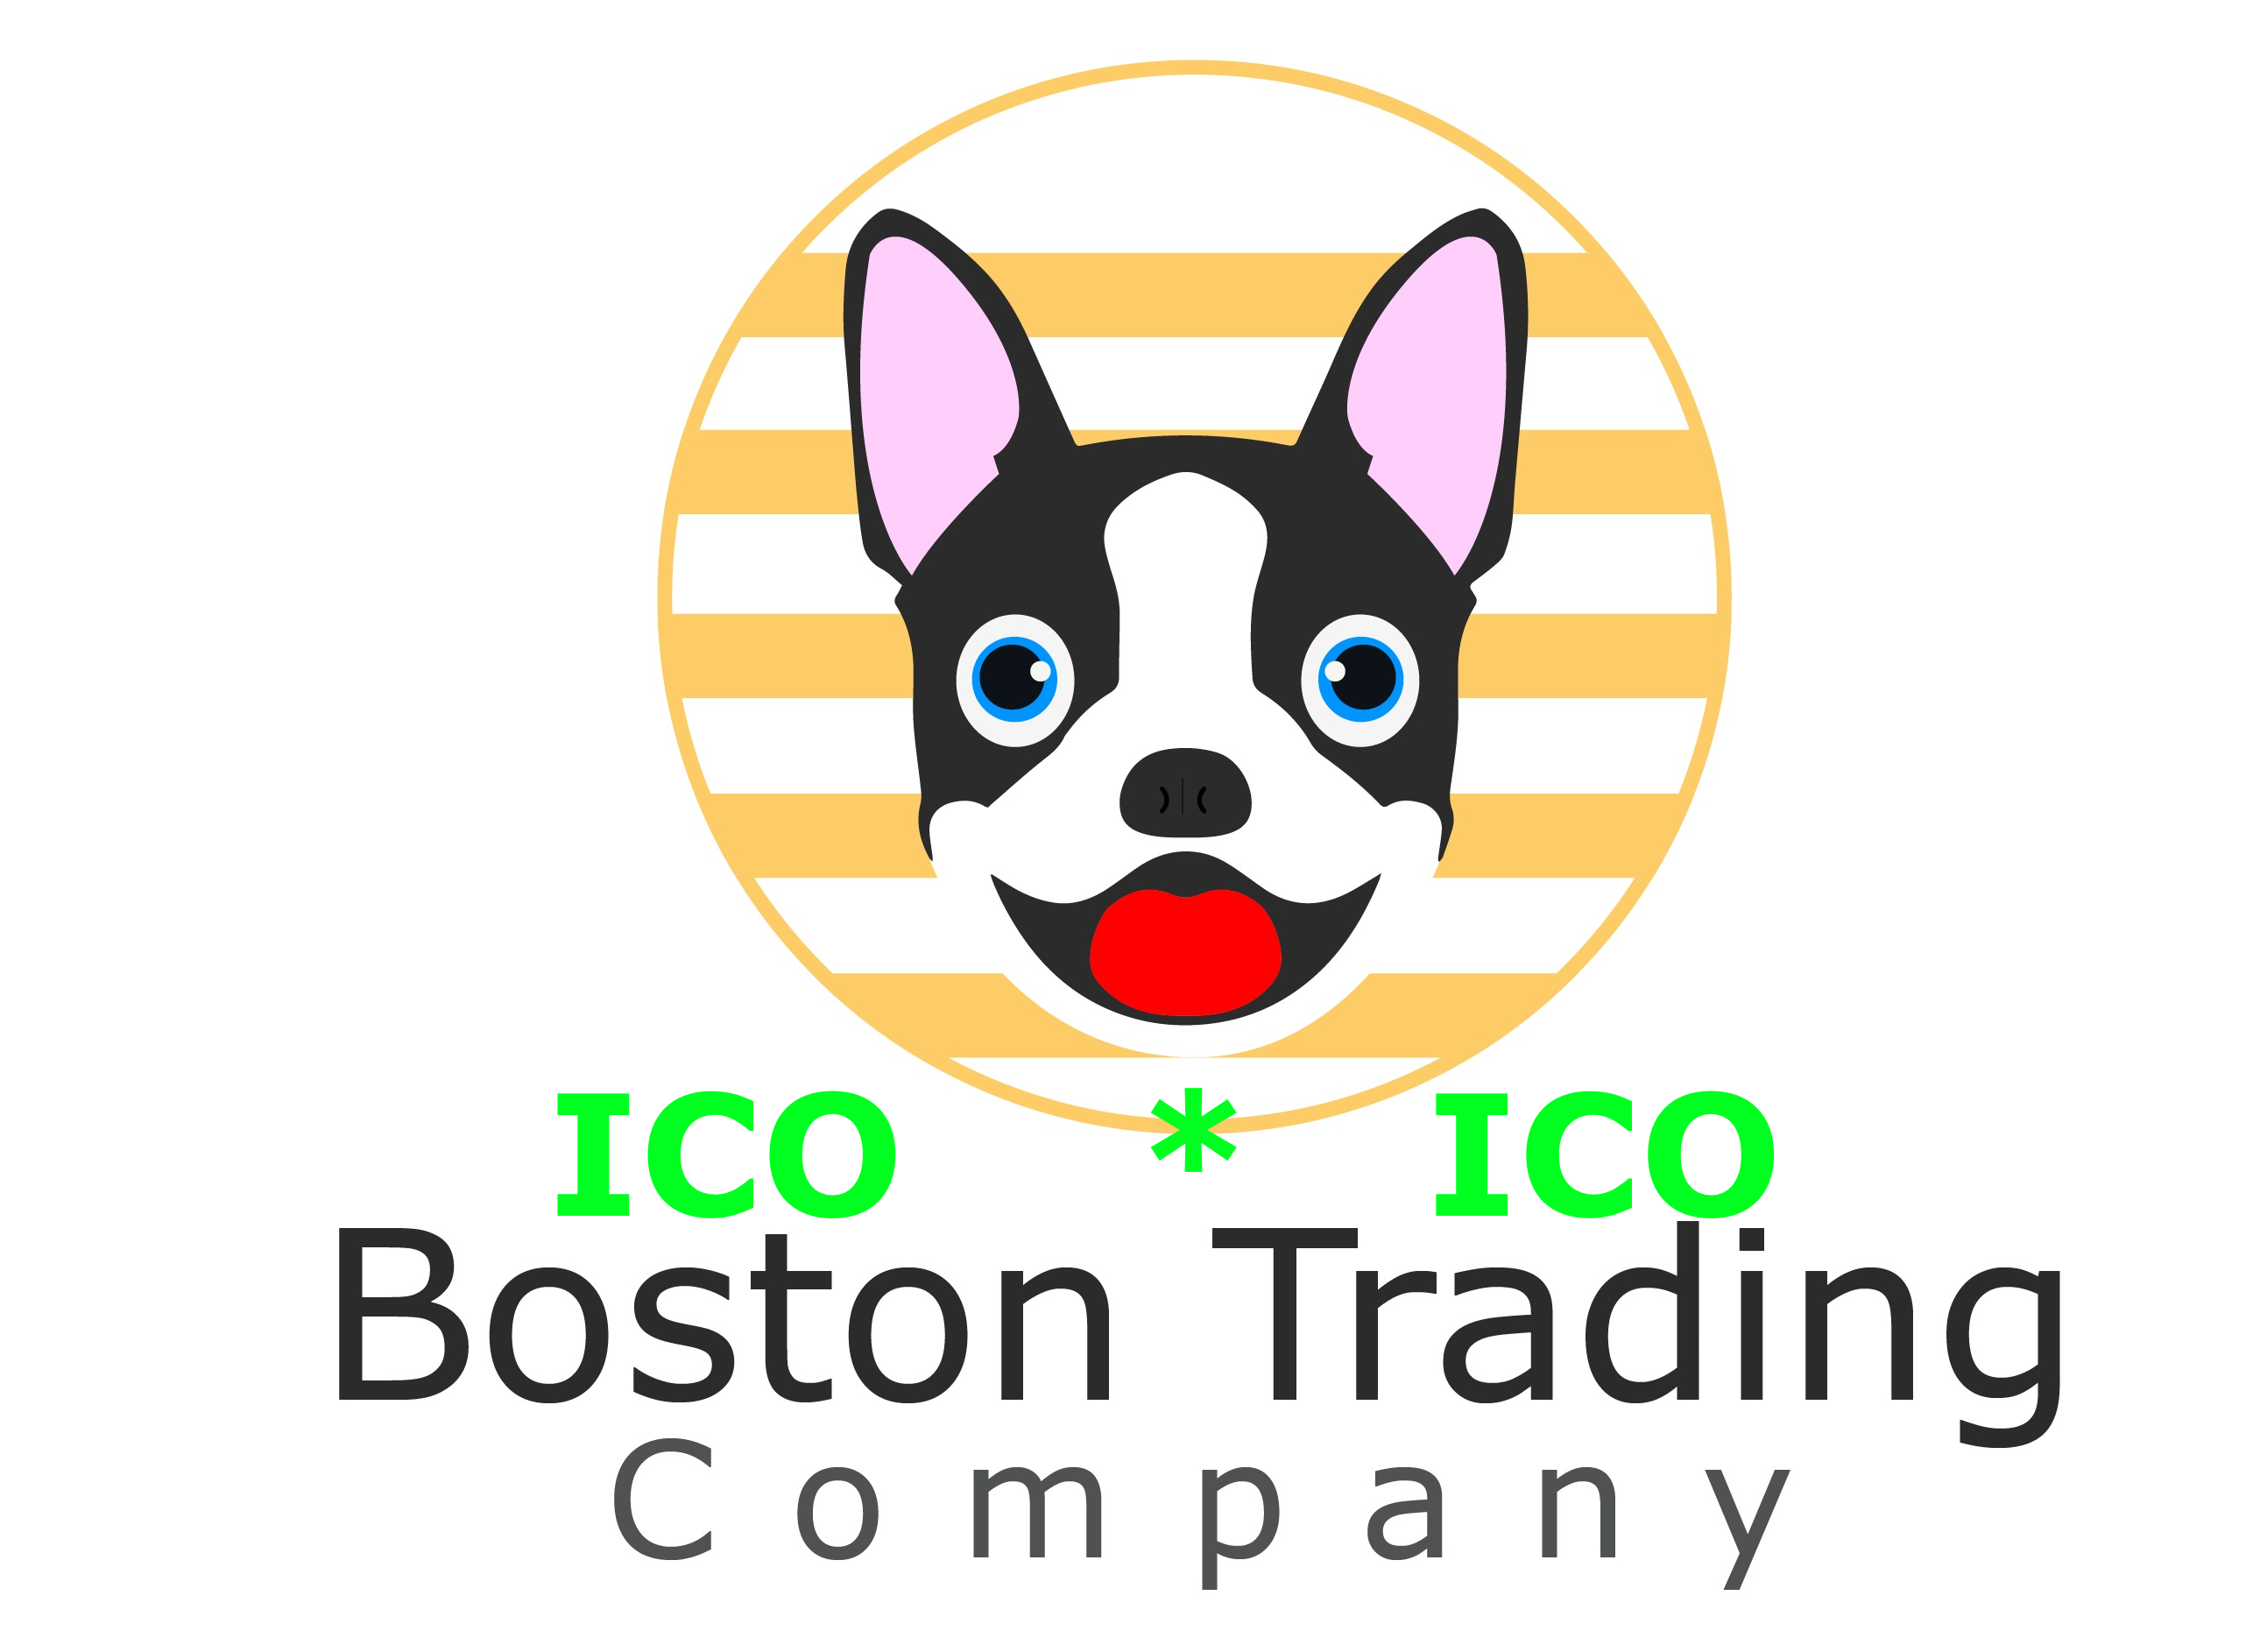 Boston ICO overlay.png